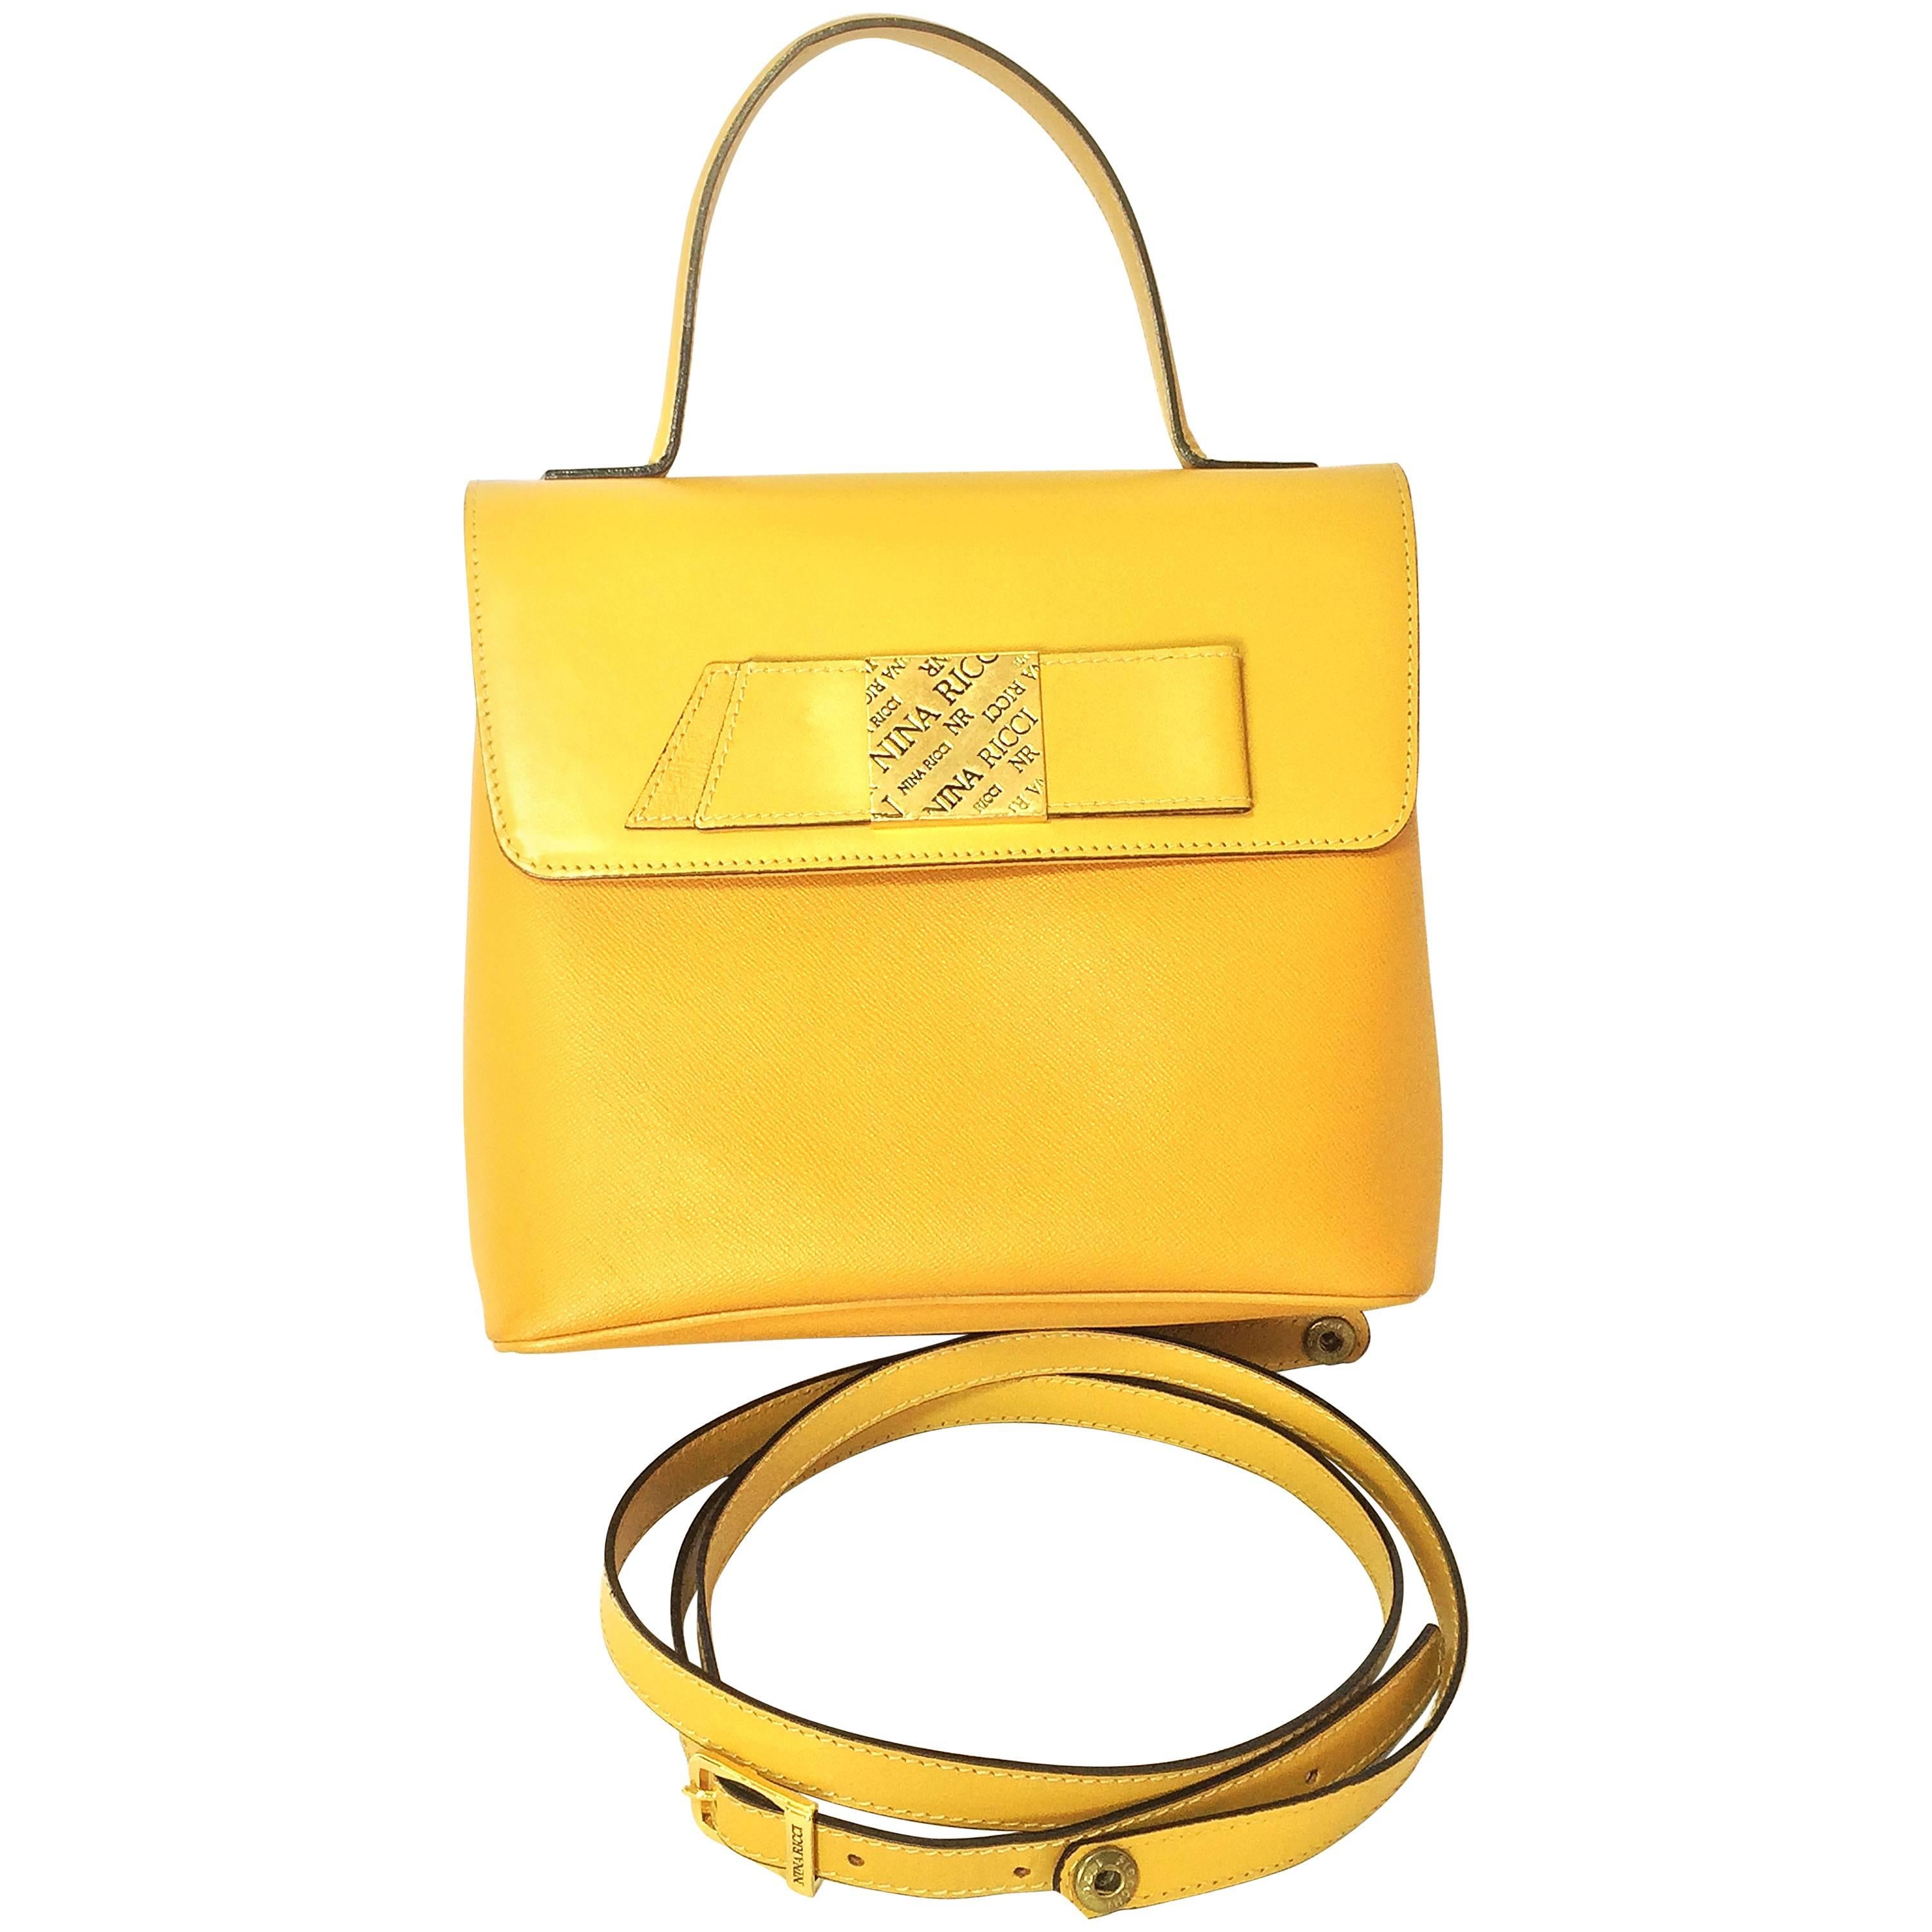 MINT. Vintage Nina Ricci yellow leather handbag purse with shoulder strap.